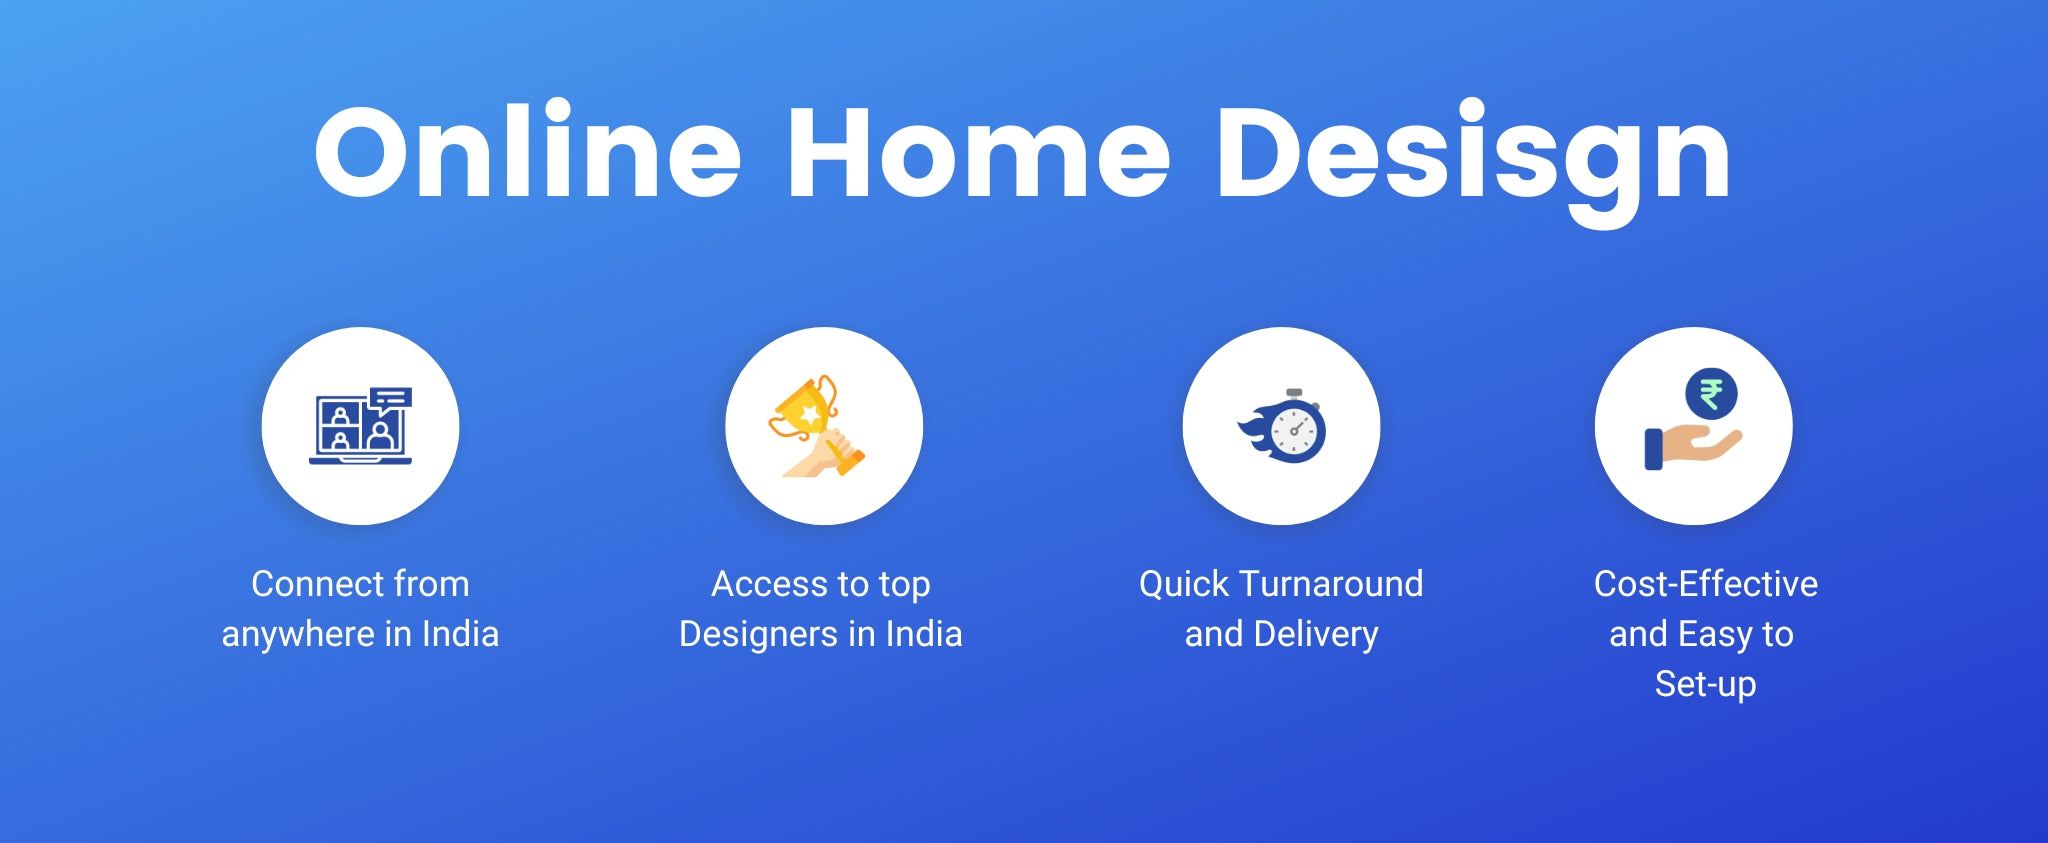 Online Home Design Service